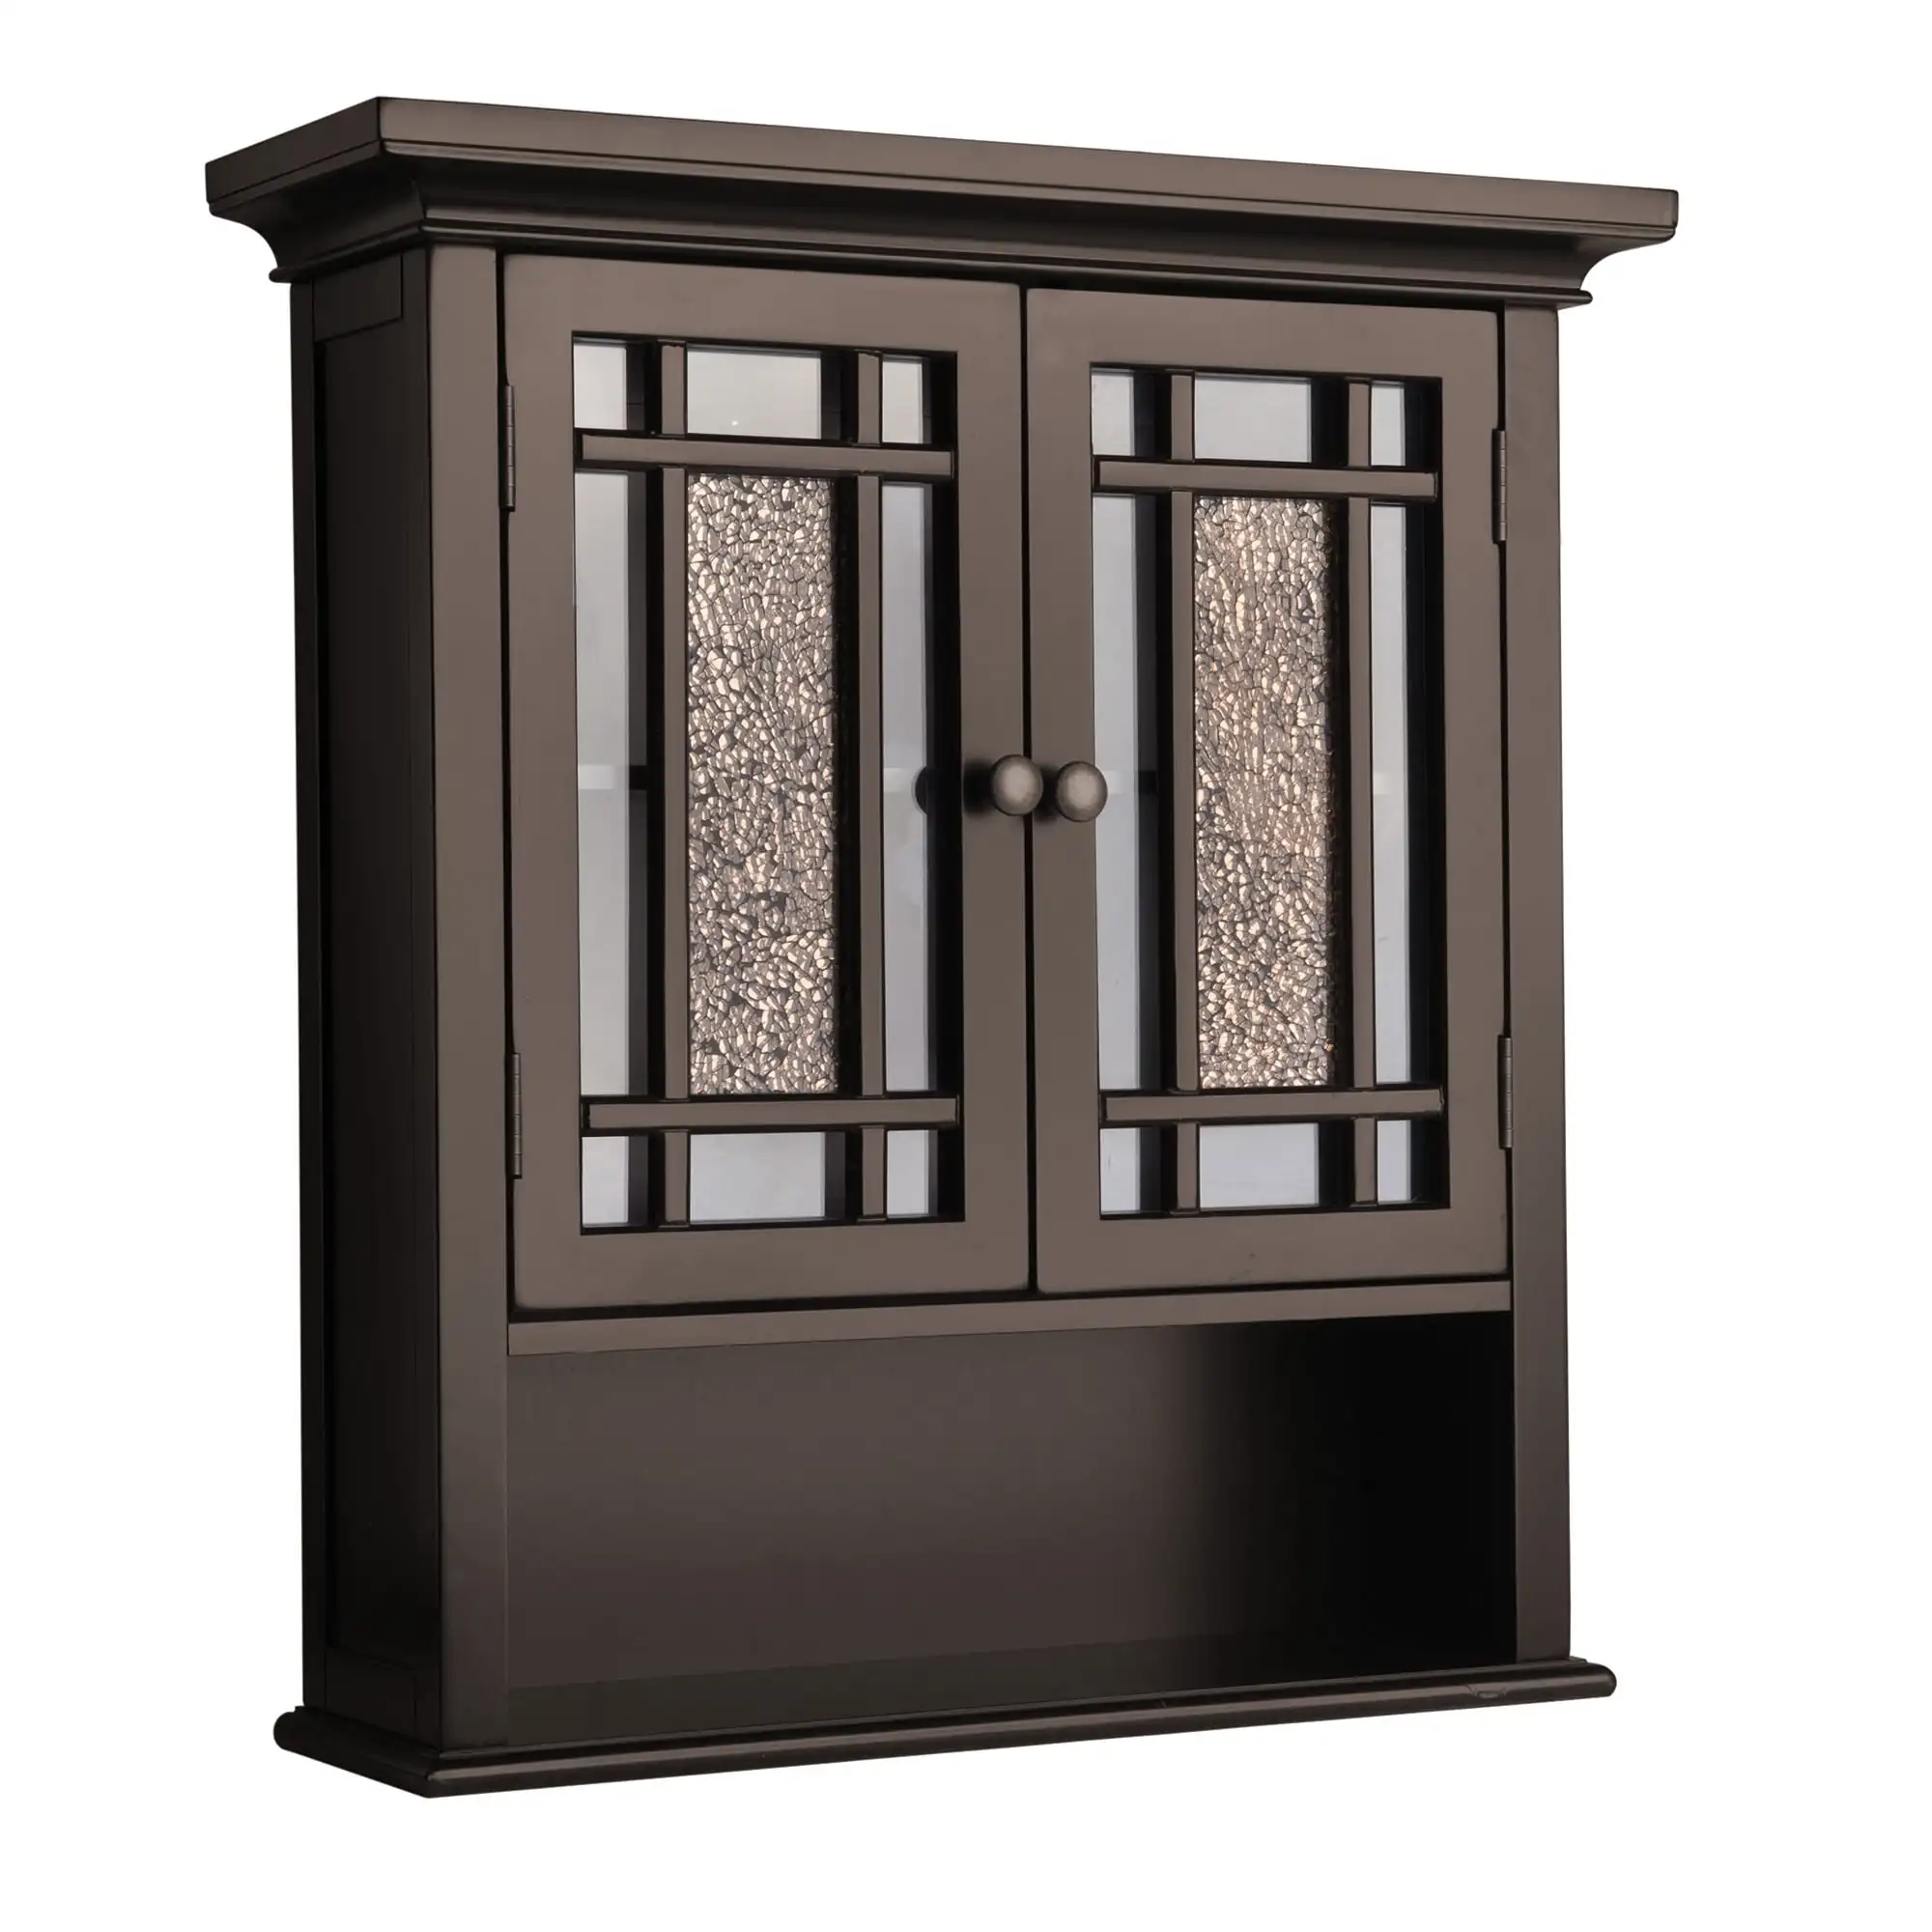 

Windsor Wooden Wall Cabinet with Glass Mosaic Doors, Dark Espresso